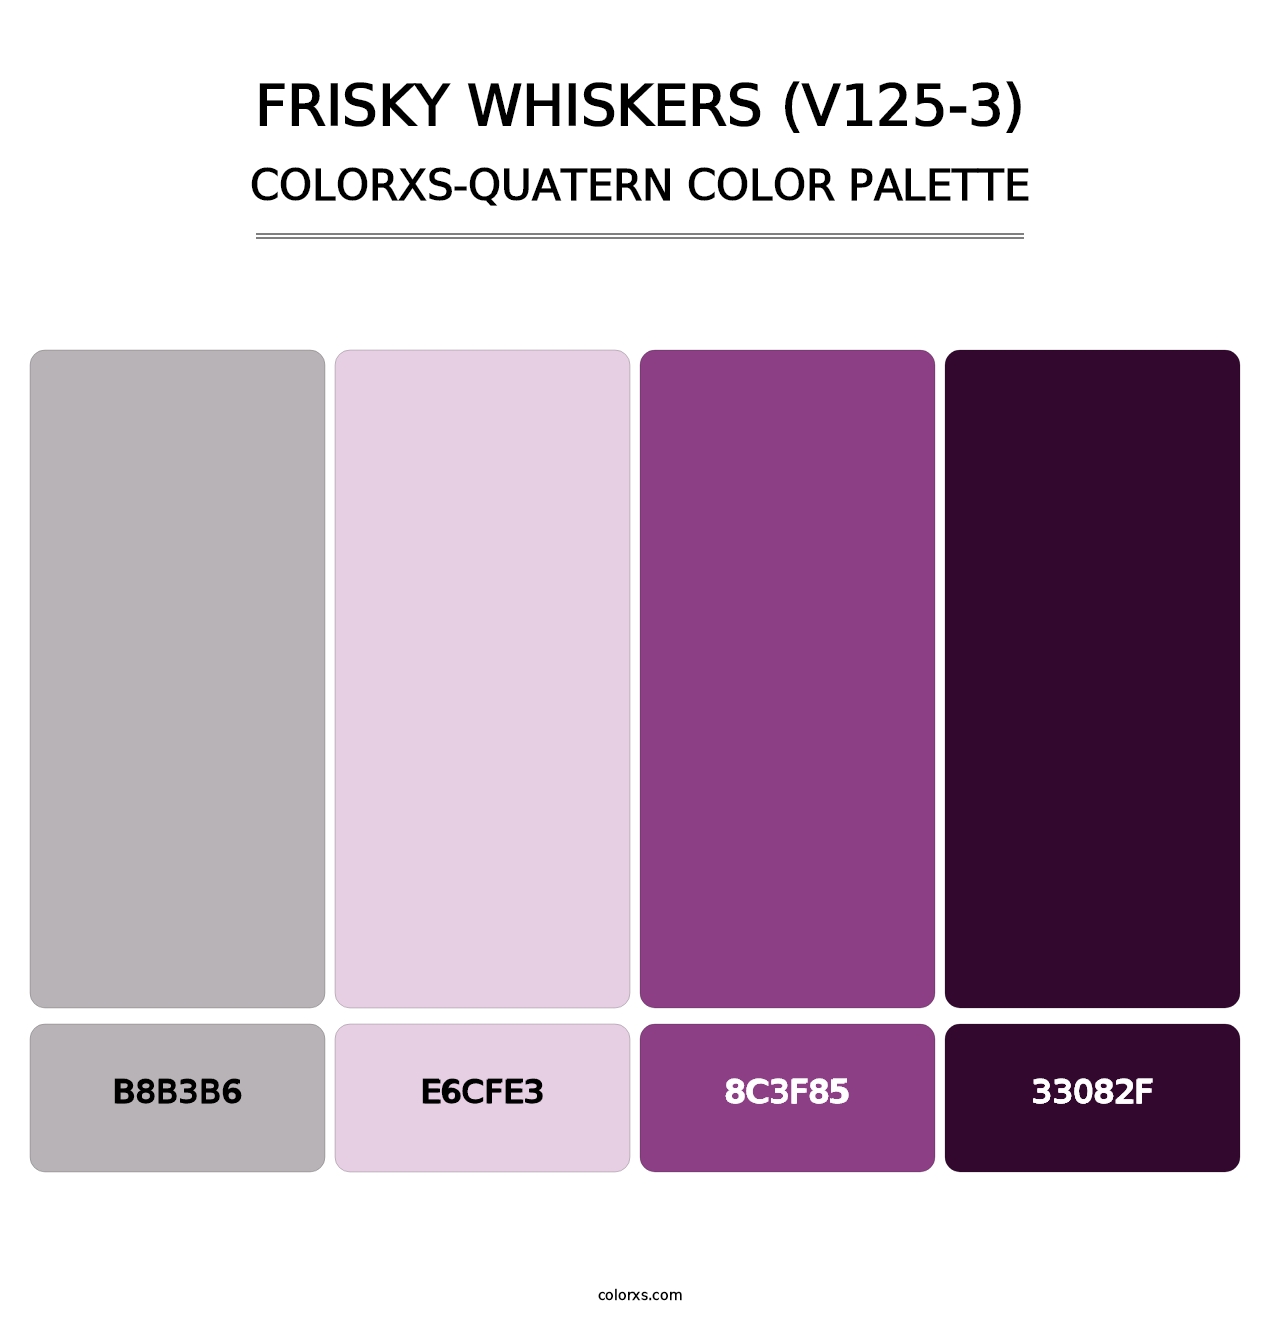 Frisky Whiskers (V125-3) - Colorxs Quatern Palette